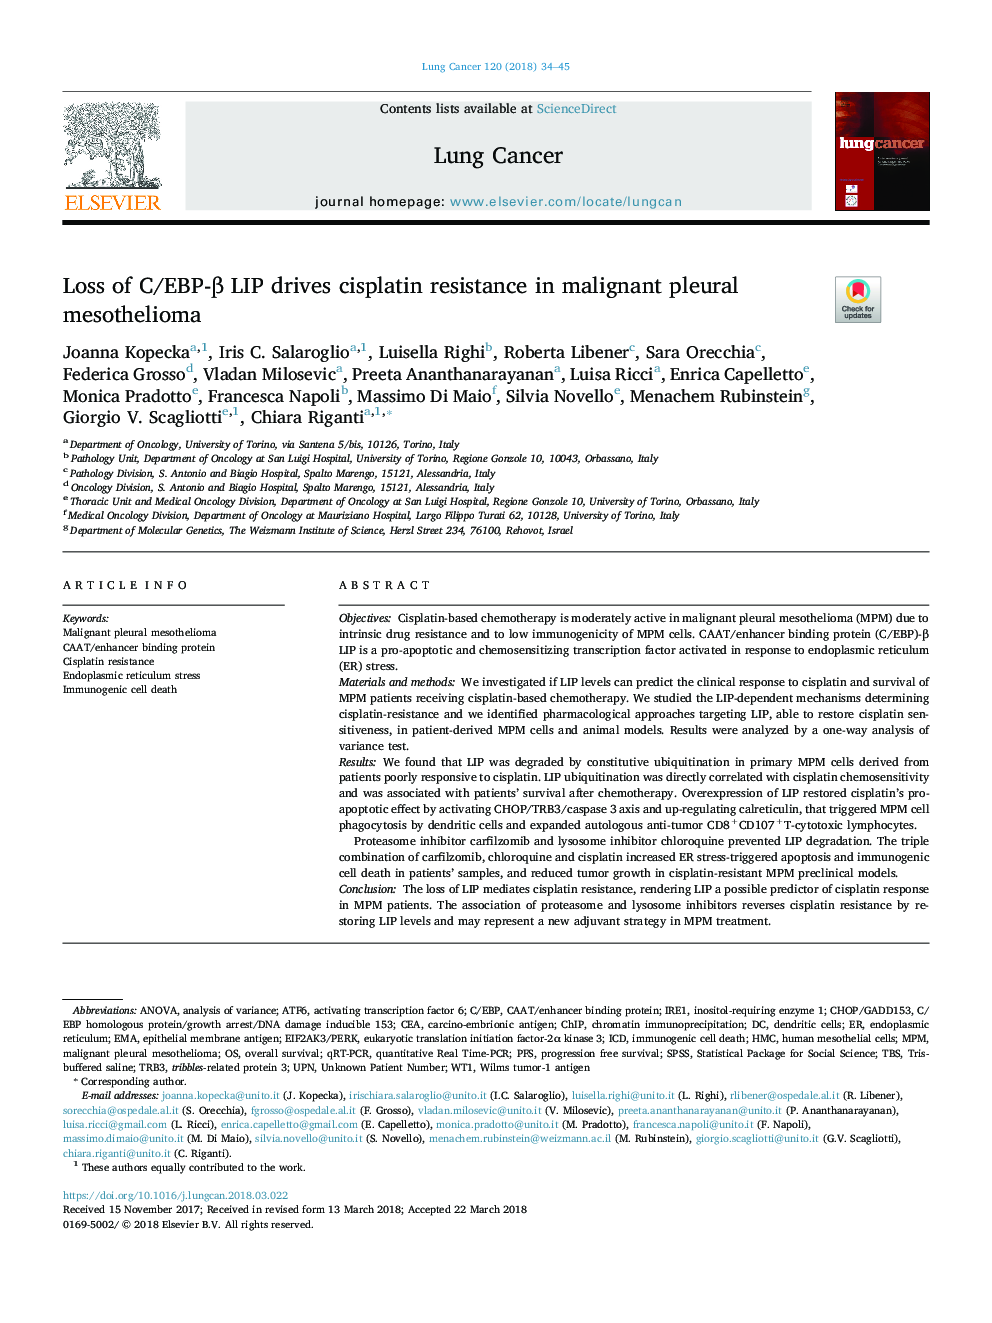 Loss of C/EBP-Î² LIP drives cisplatin resistance in malignant pleural mesothelioma